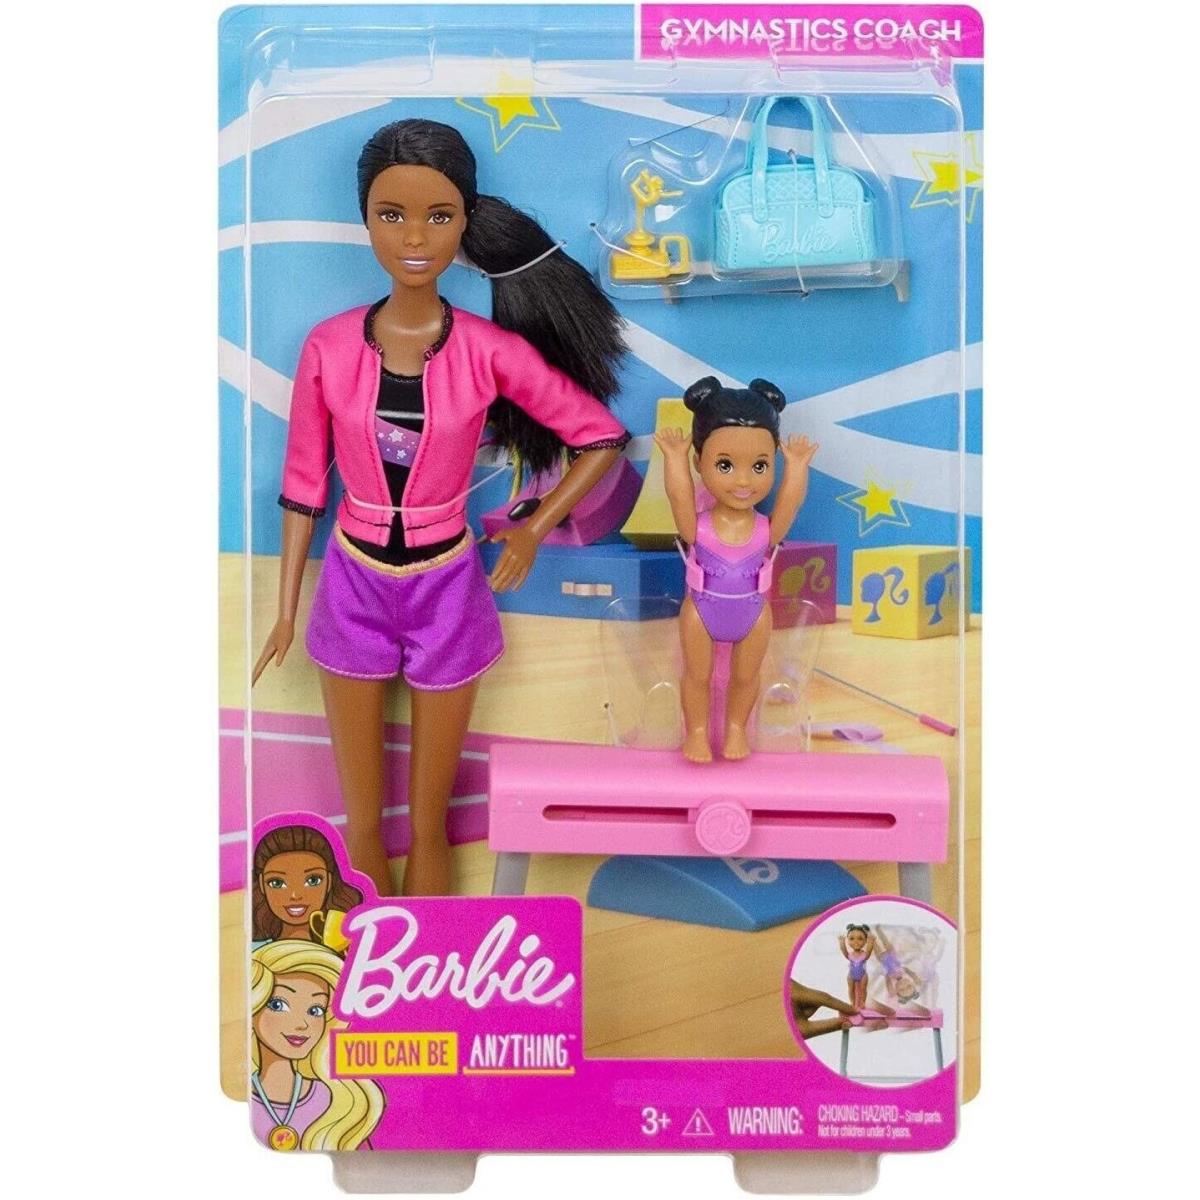 Barbie Student Gymnastics Coach Playset Brunette African American Htf